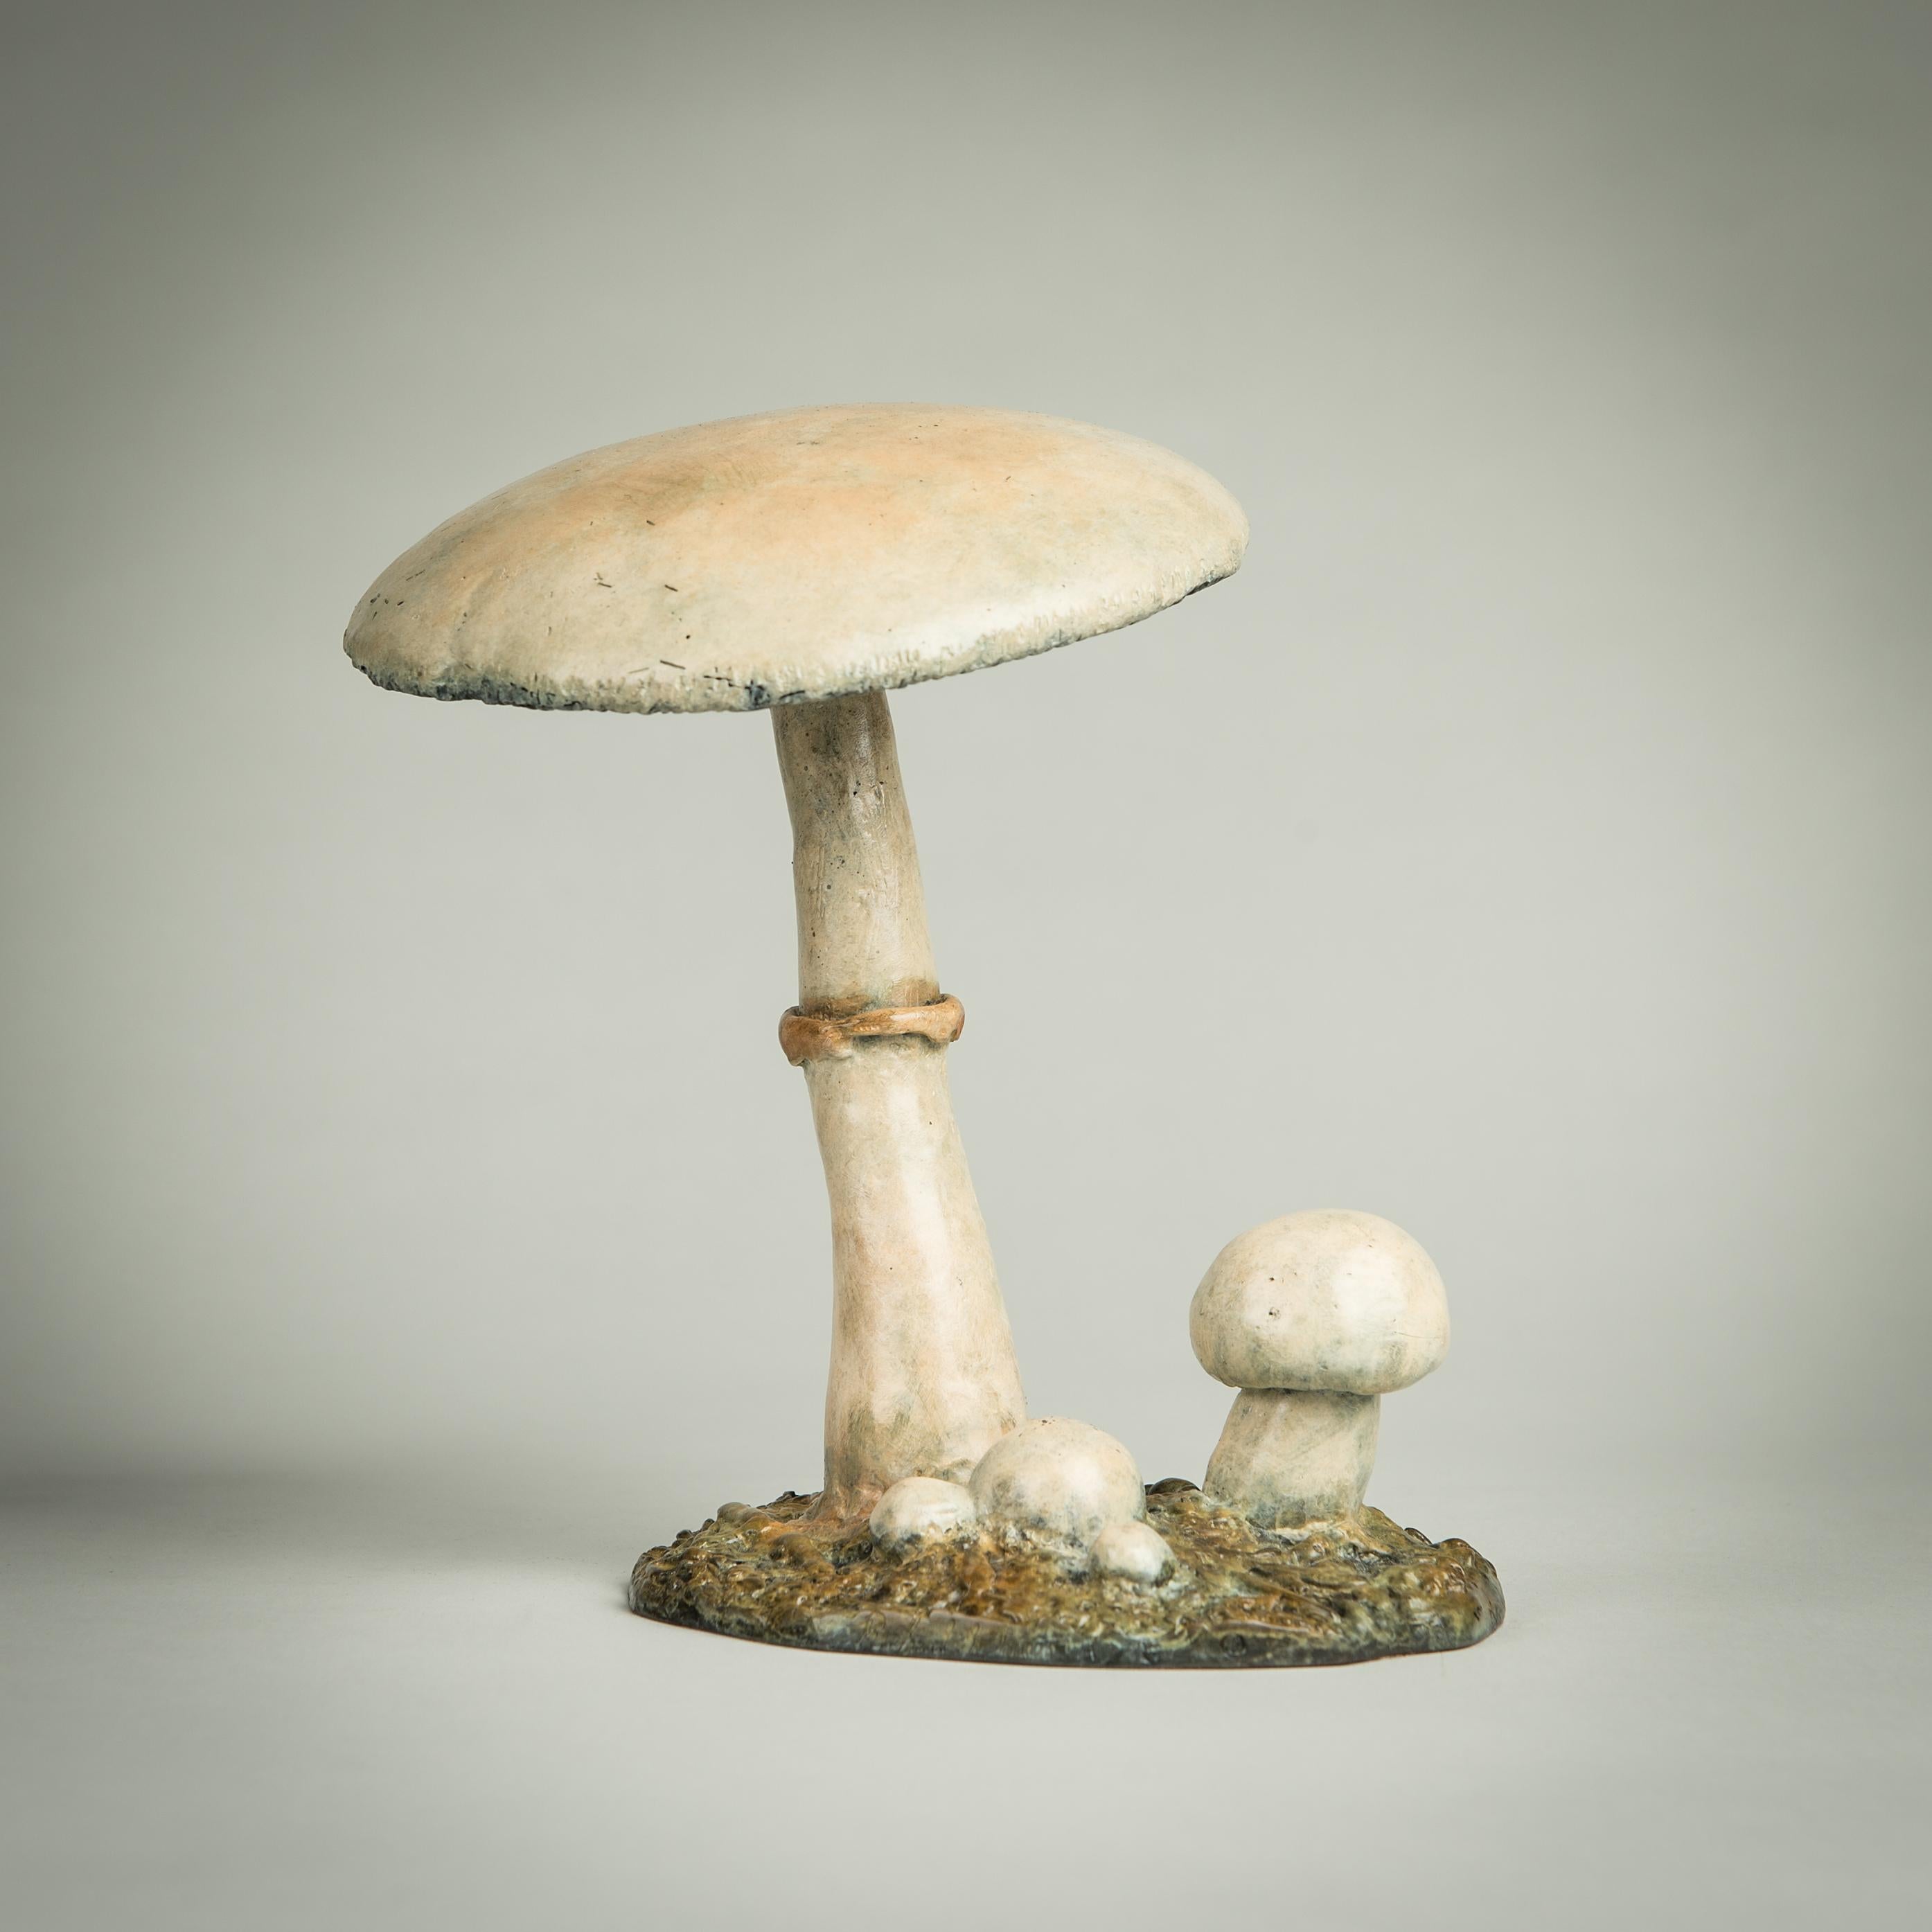 Richard Smith b.1955 Still-Life Sculpture - 'Horse Mushroom' Contemporary desktop Bronze sculpture of mushrooms, white cream